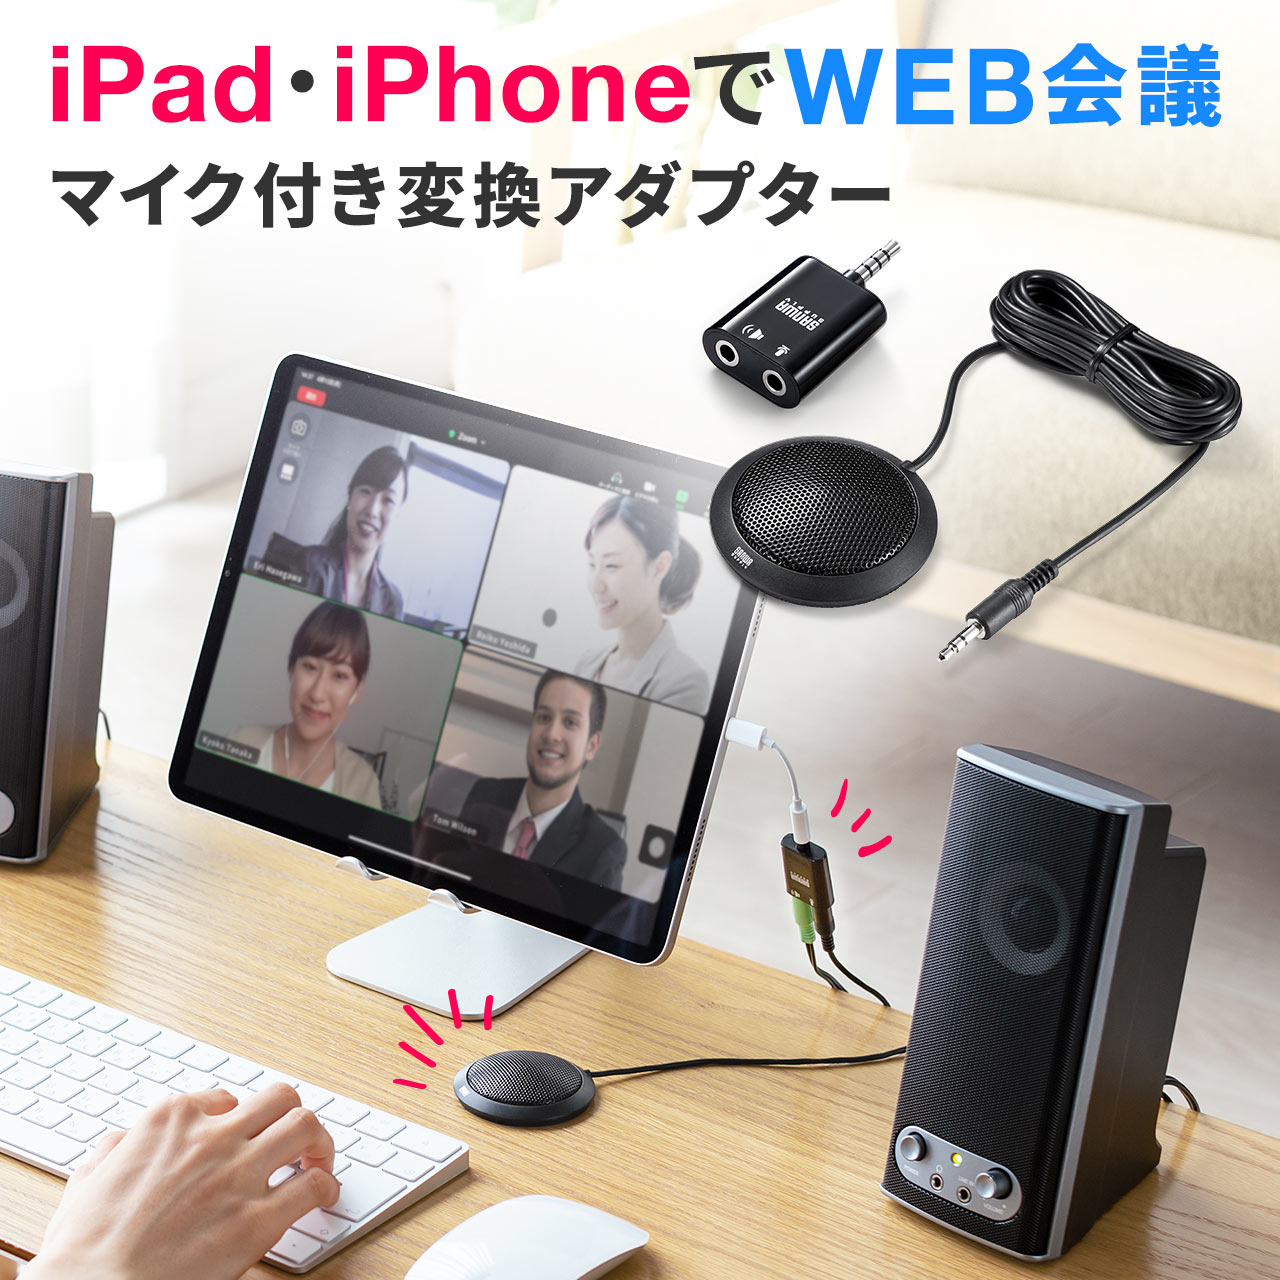 iPhone iPad WEB会議用マイク アダプタ 音声分配 Skype FaceTime Zoom WEB会議マイク